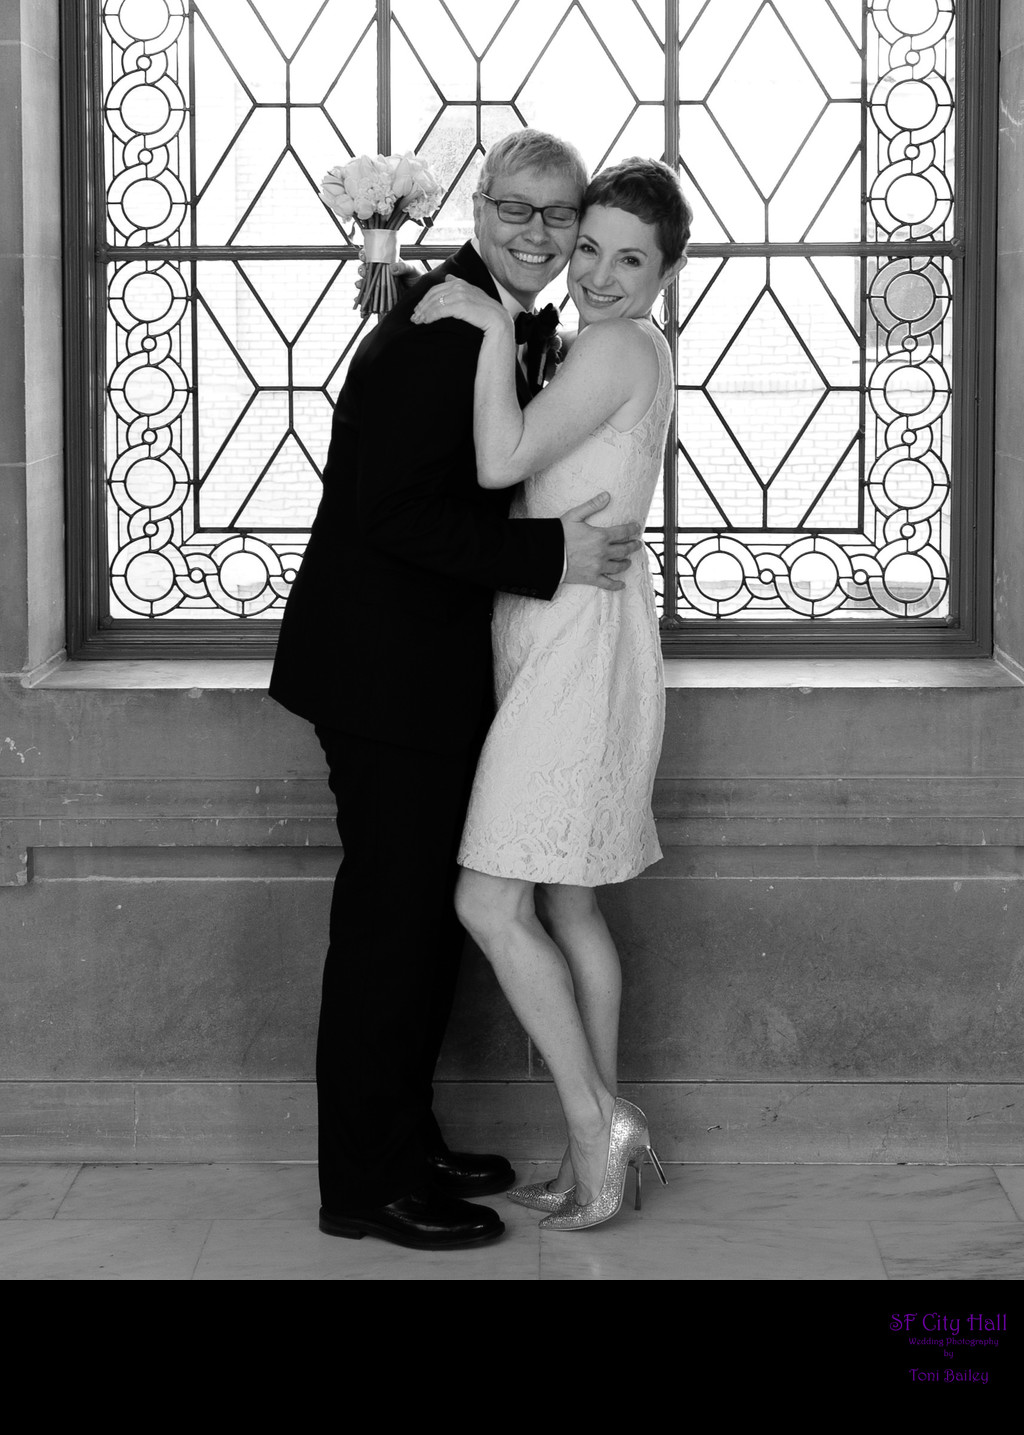 fun wedding photographers at city hall